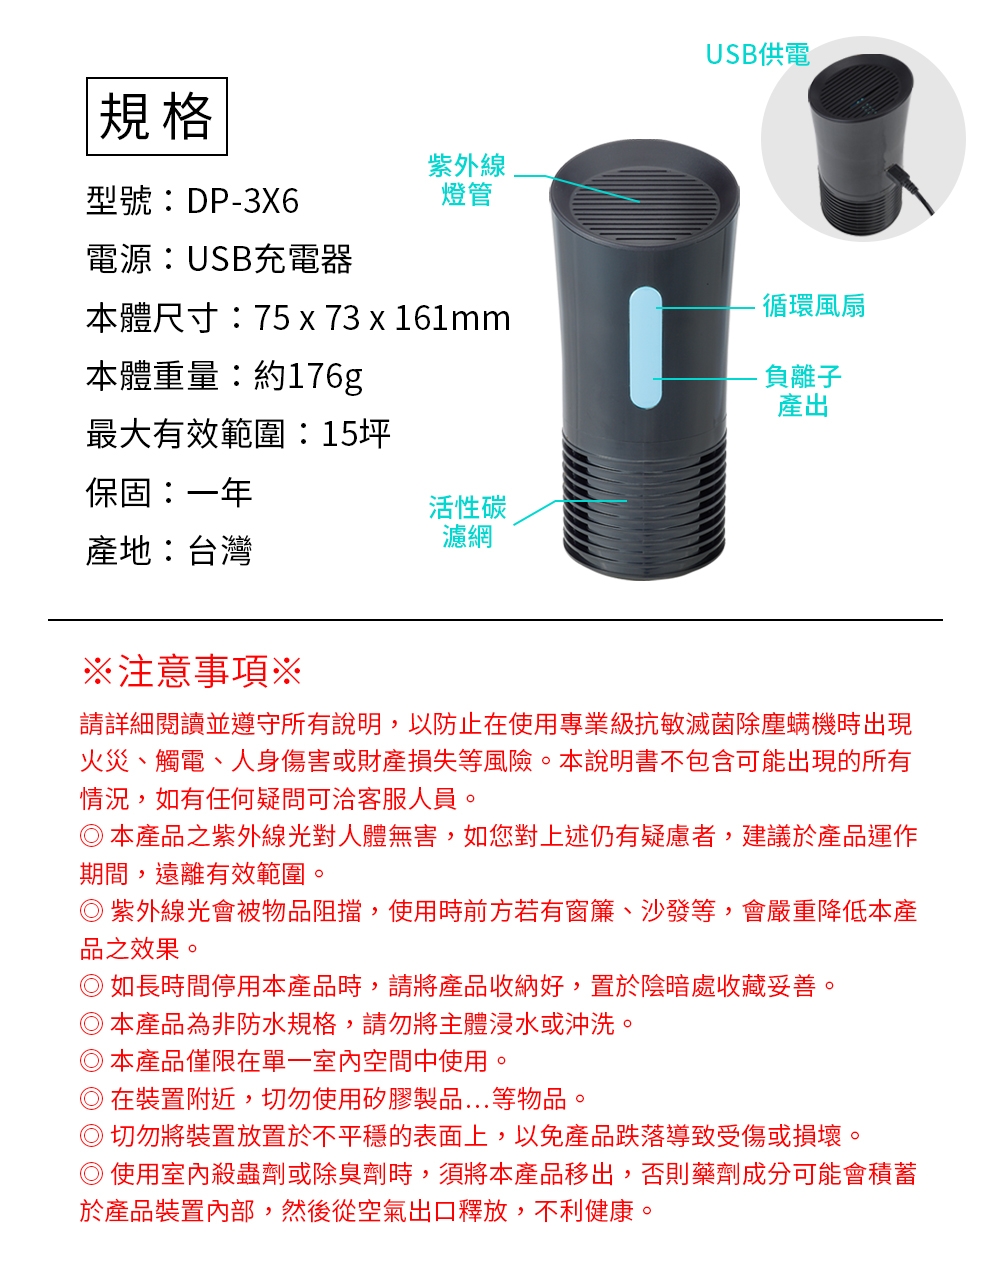 DigiMax★DP-3X6 侍衛級超淨化空氣清淨除塵螨機